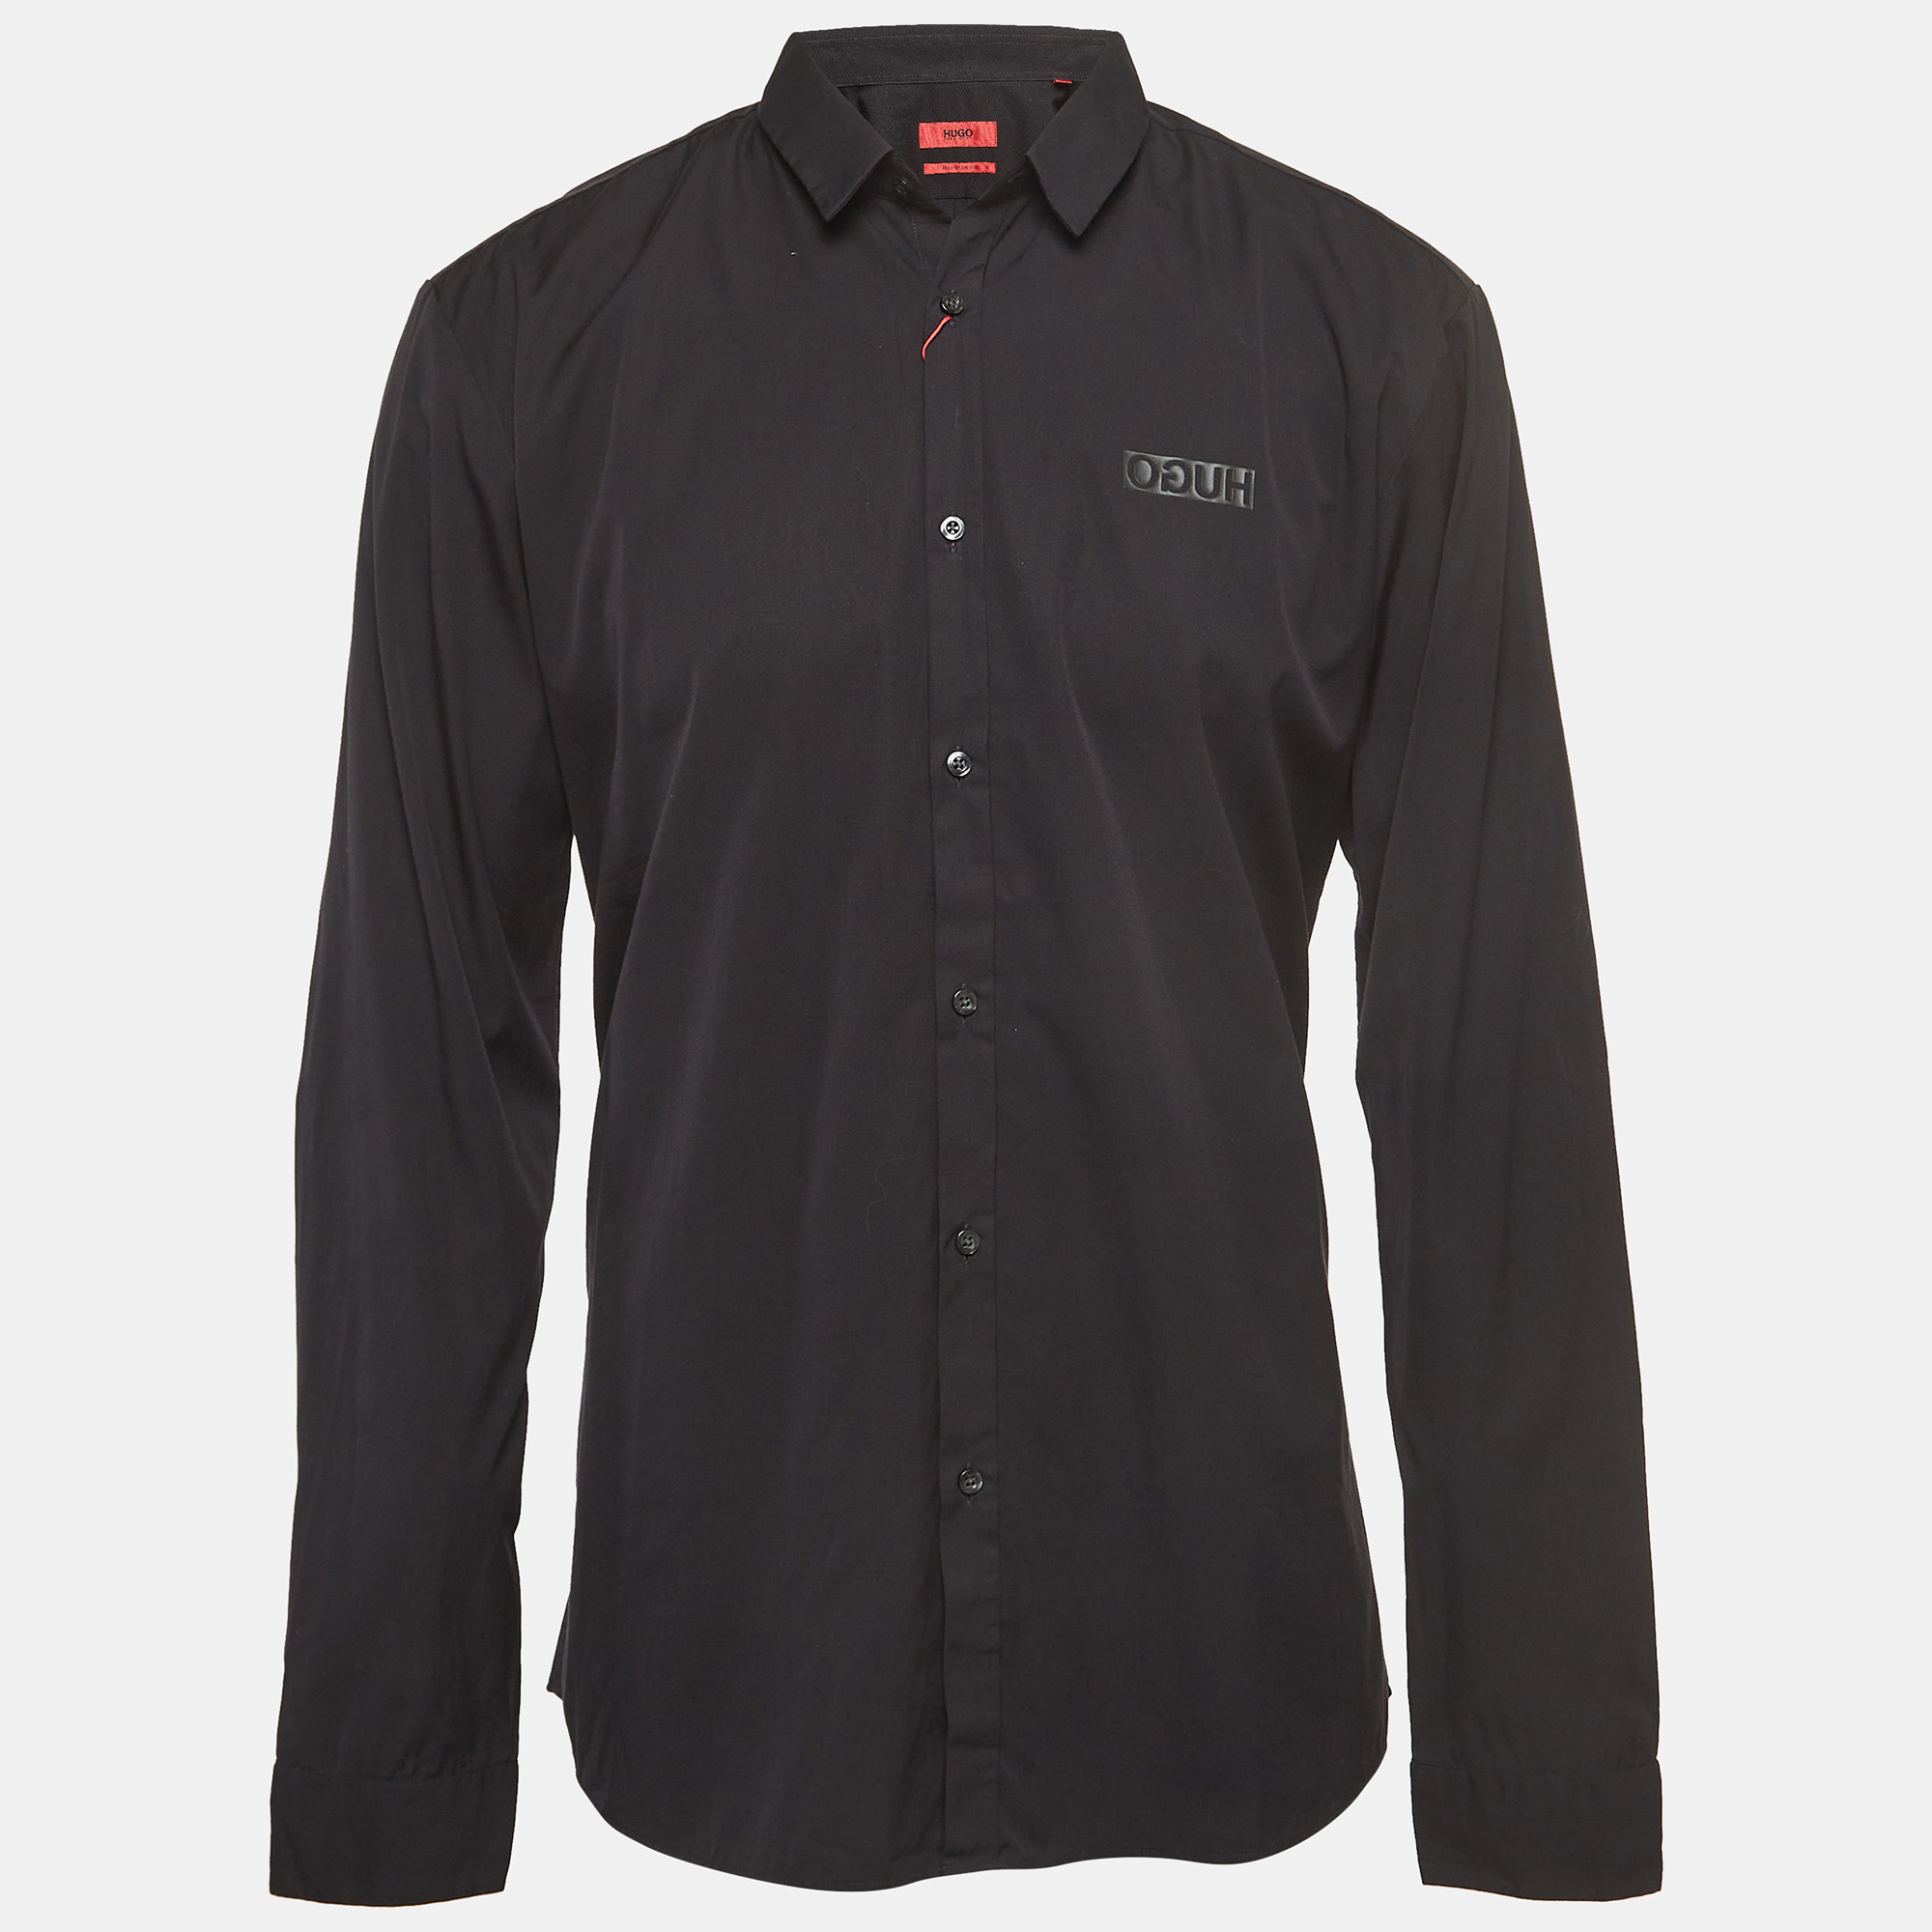 Hugo boss black cotton long sleeve shirt 2xl